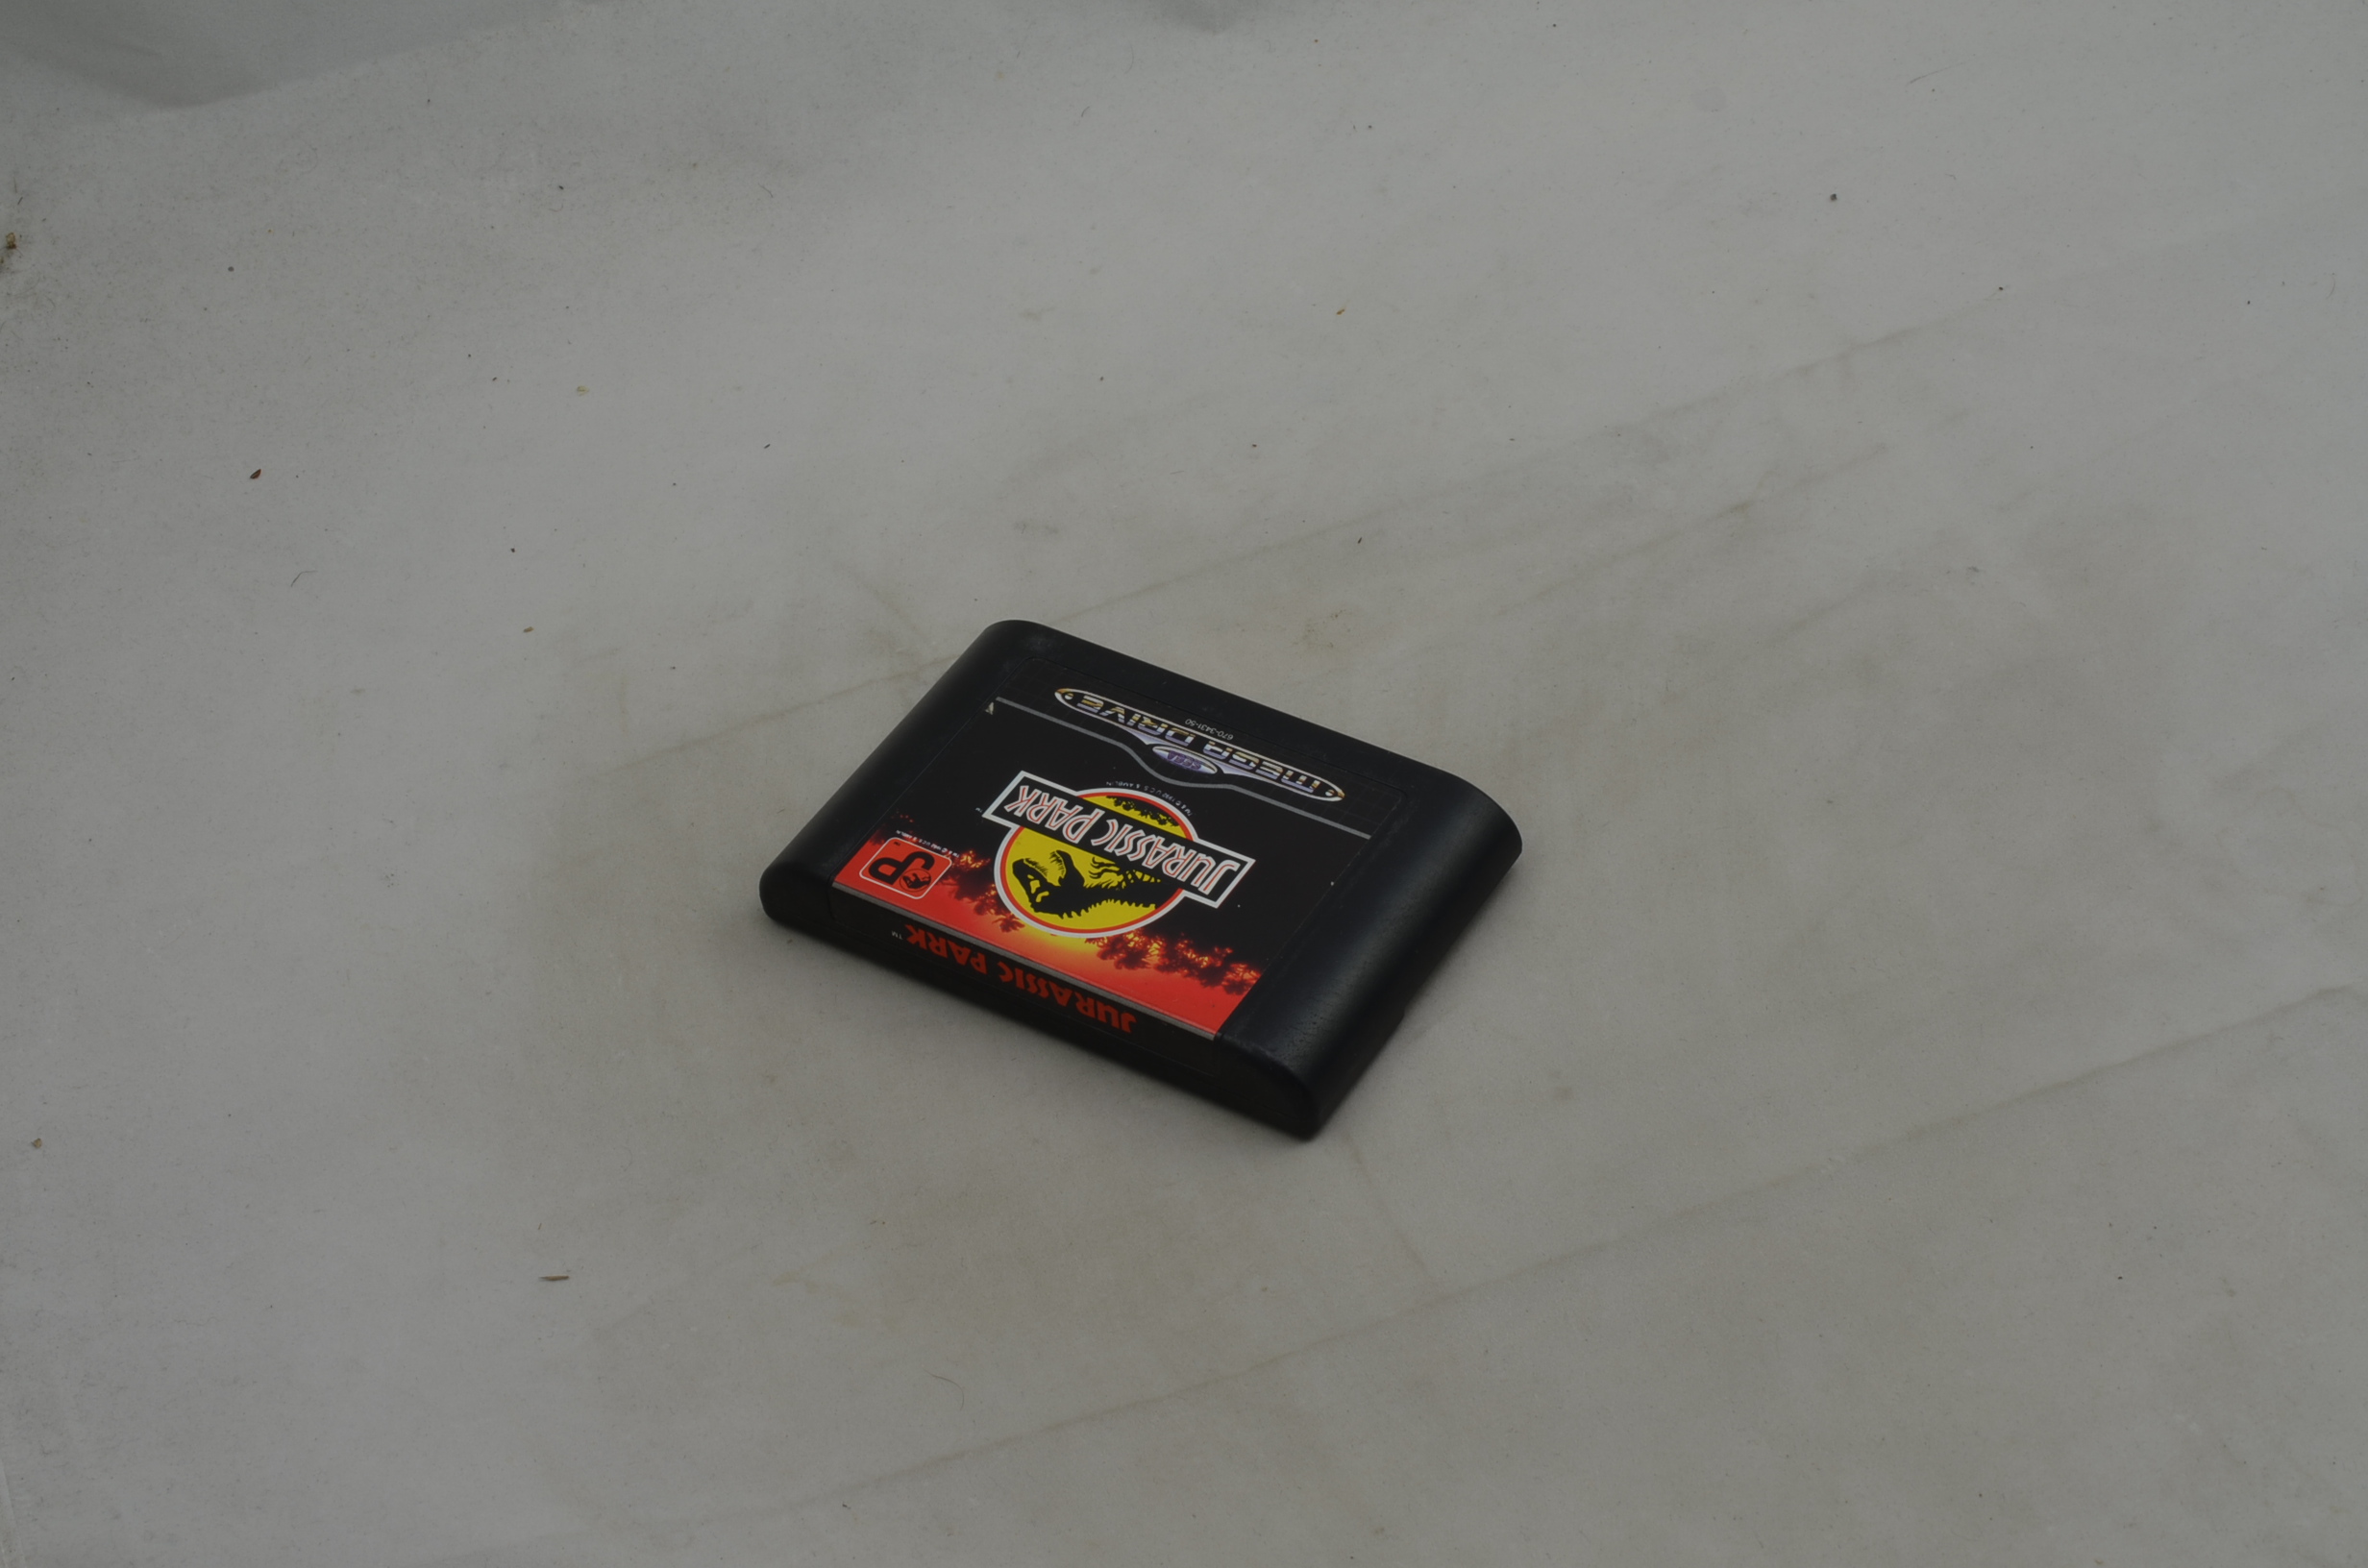 Produktbild von Jurassic Park Sega Mega Drive Spiel